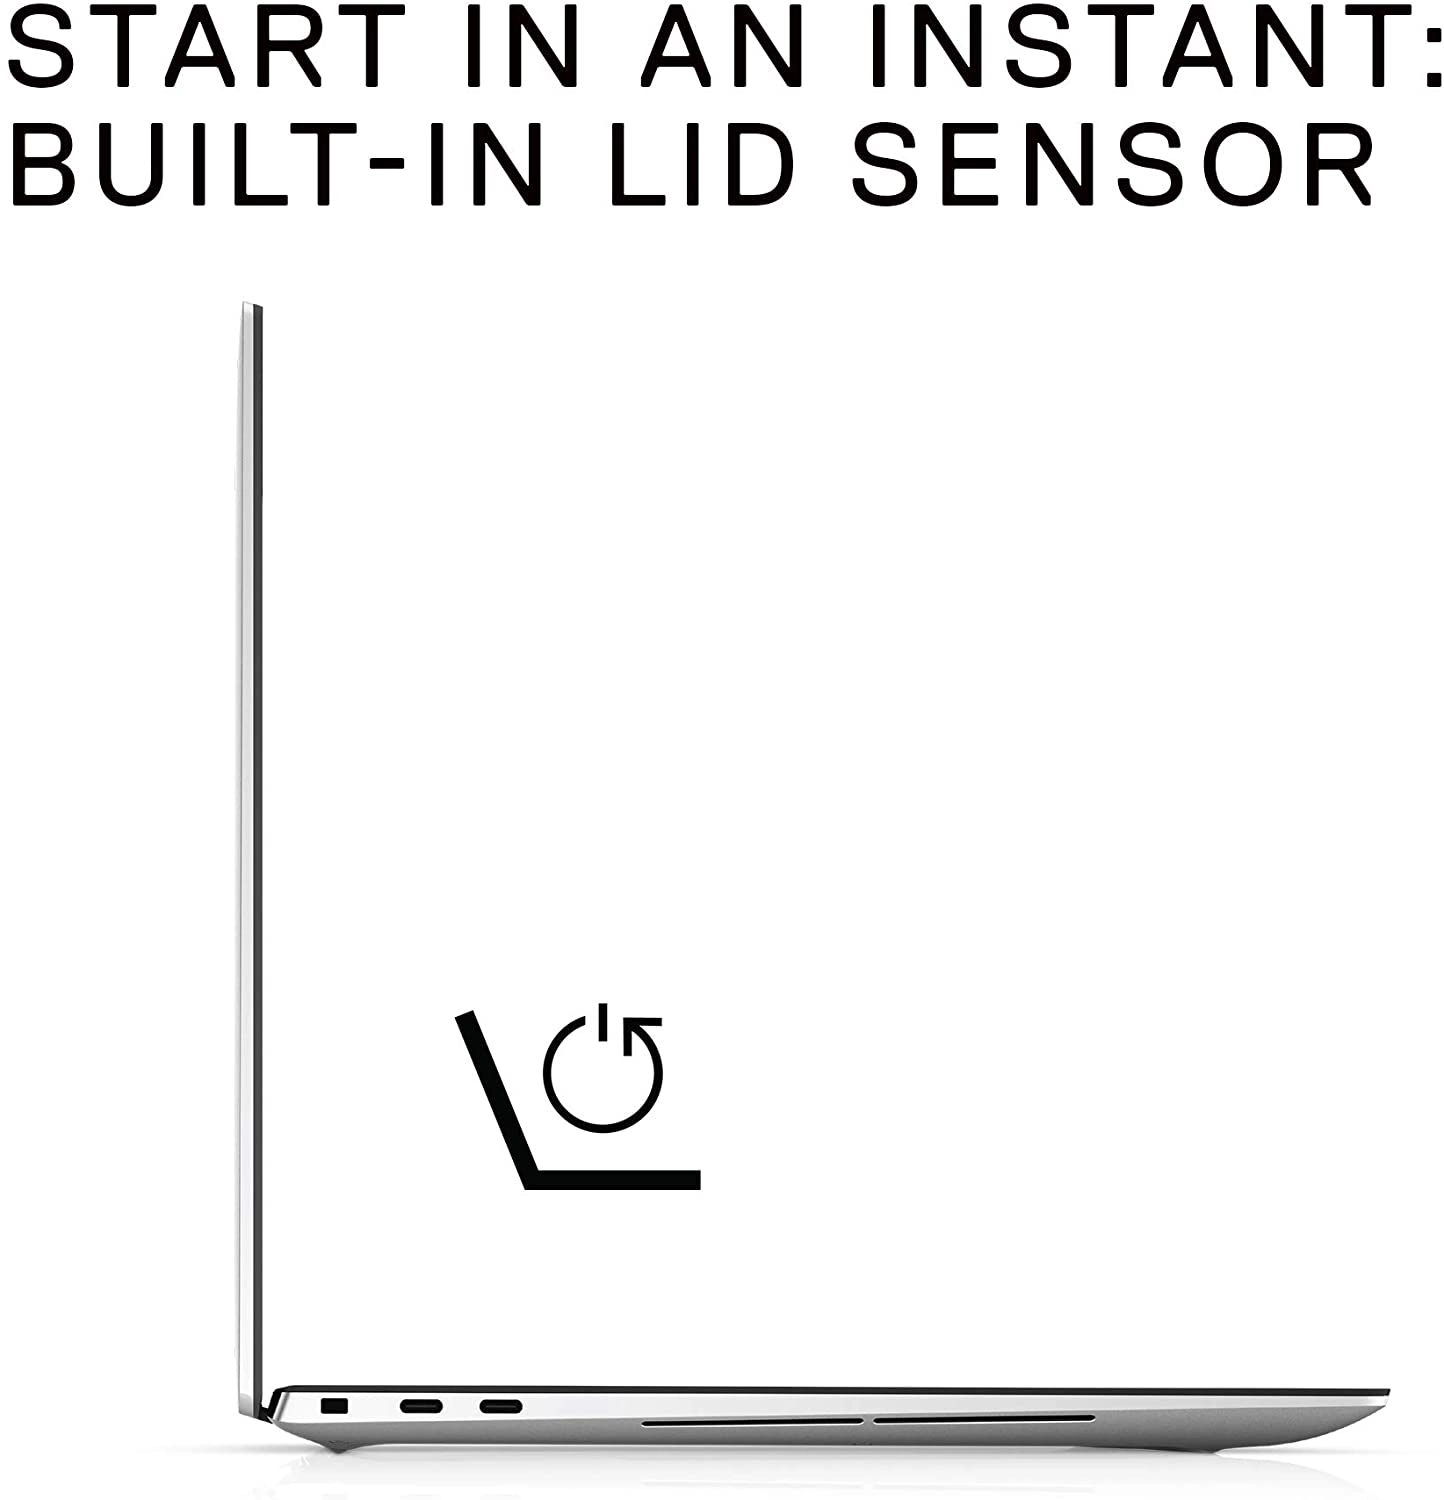 Dell XPS9500-7002SLV-PUS laptop image